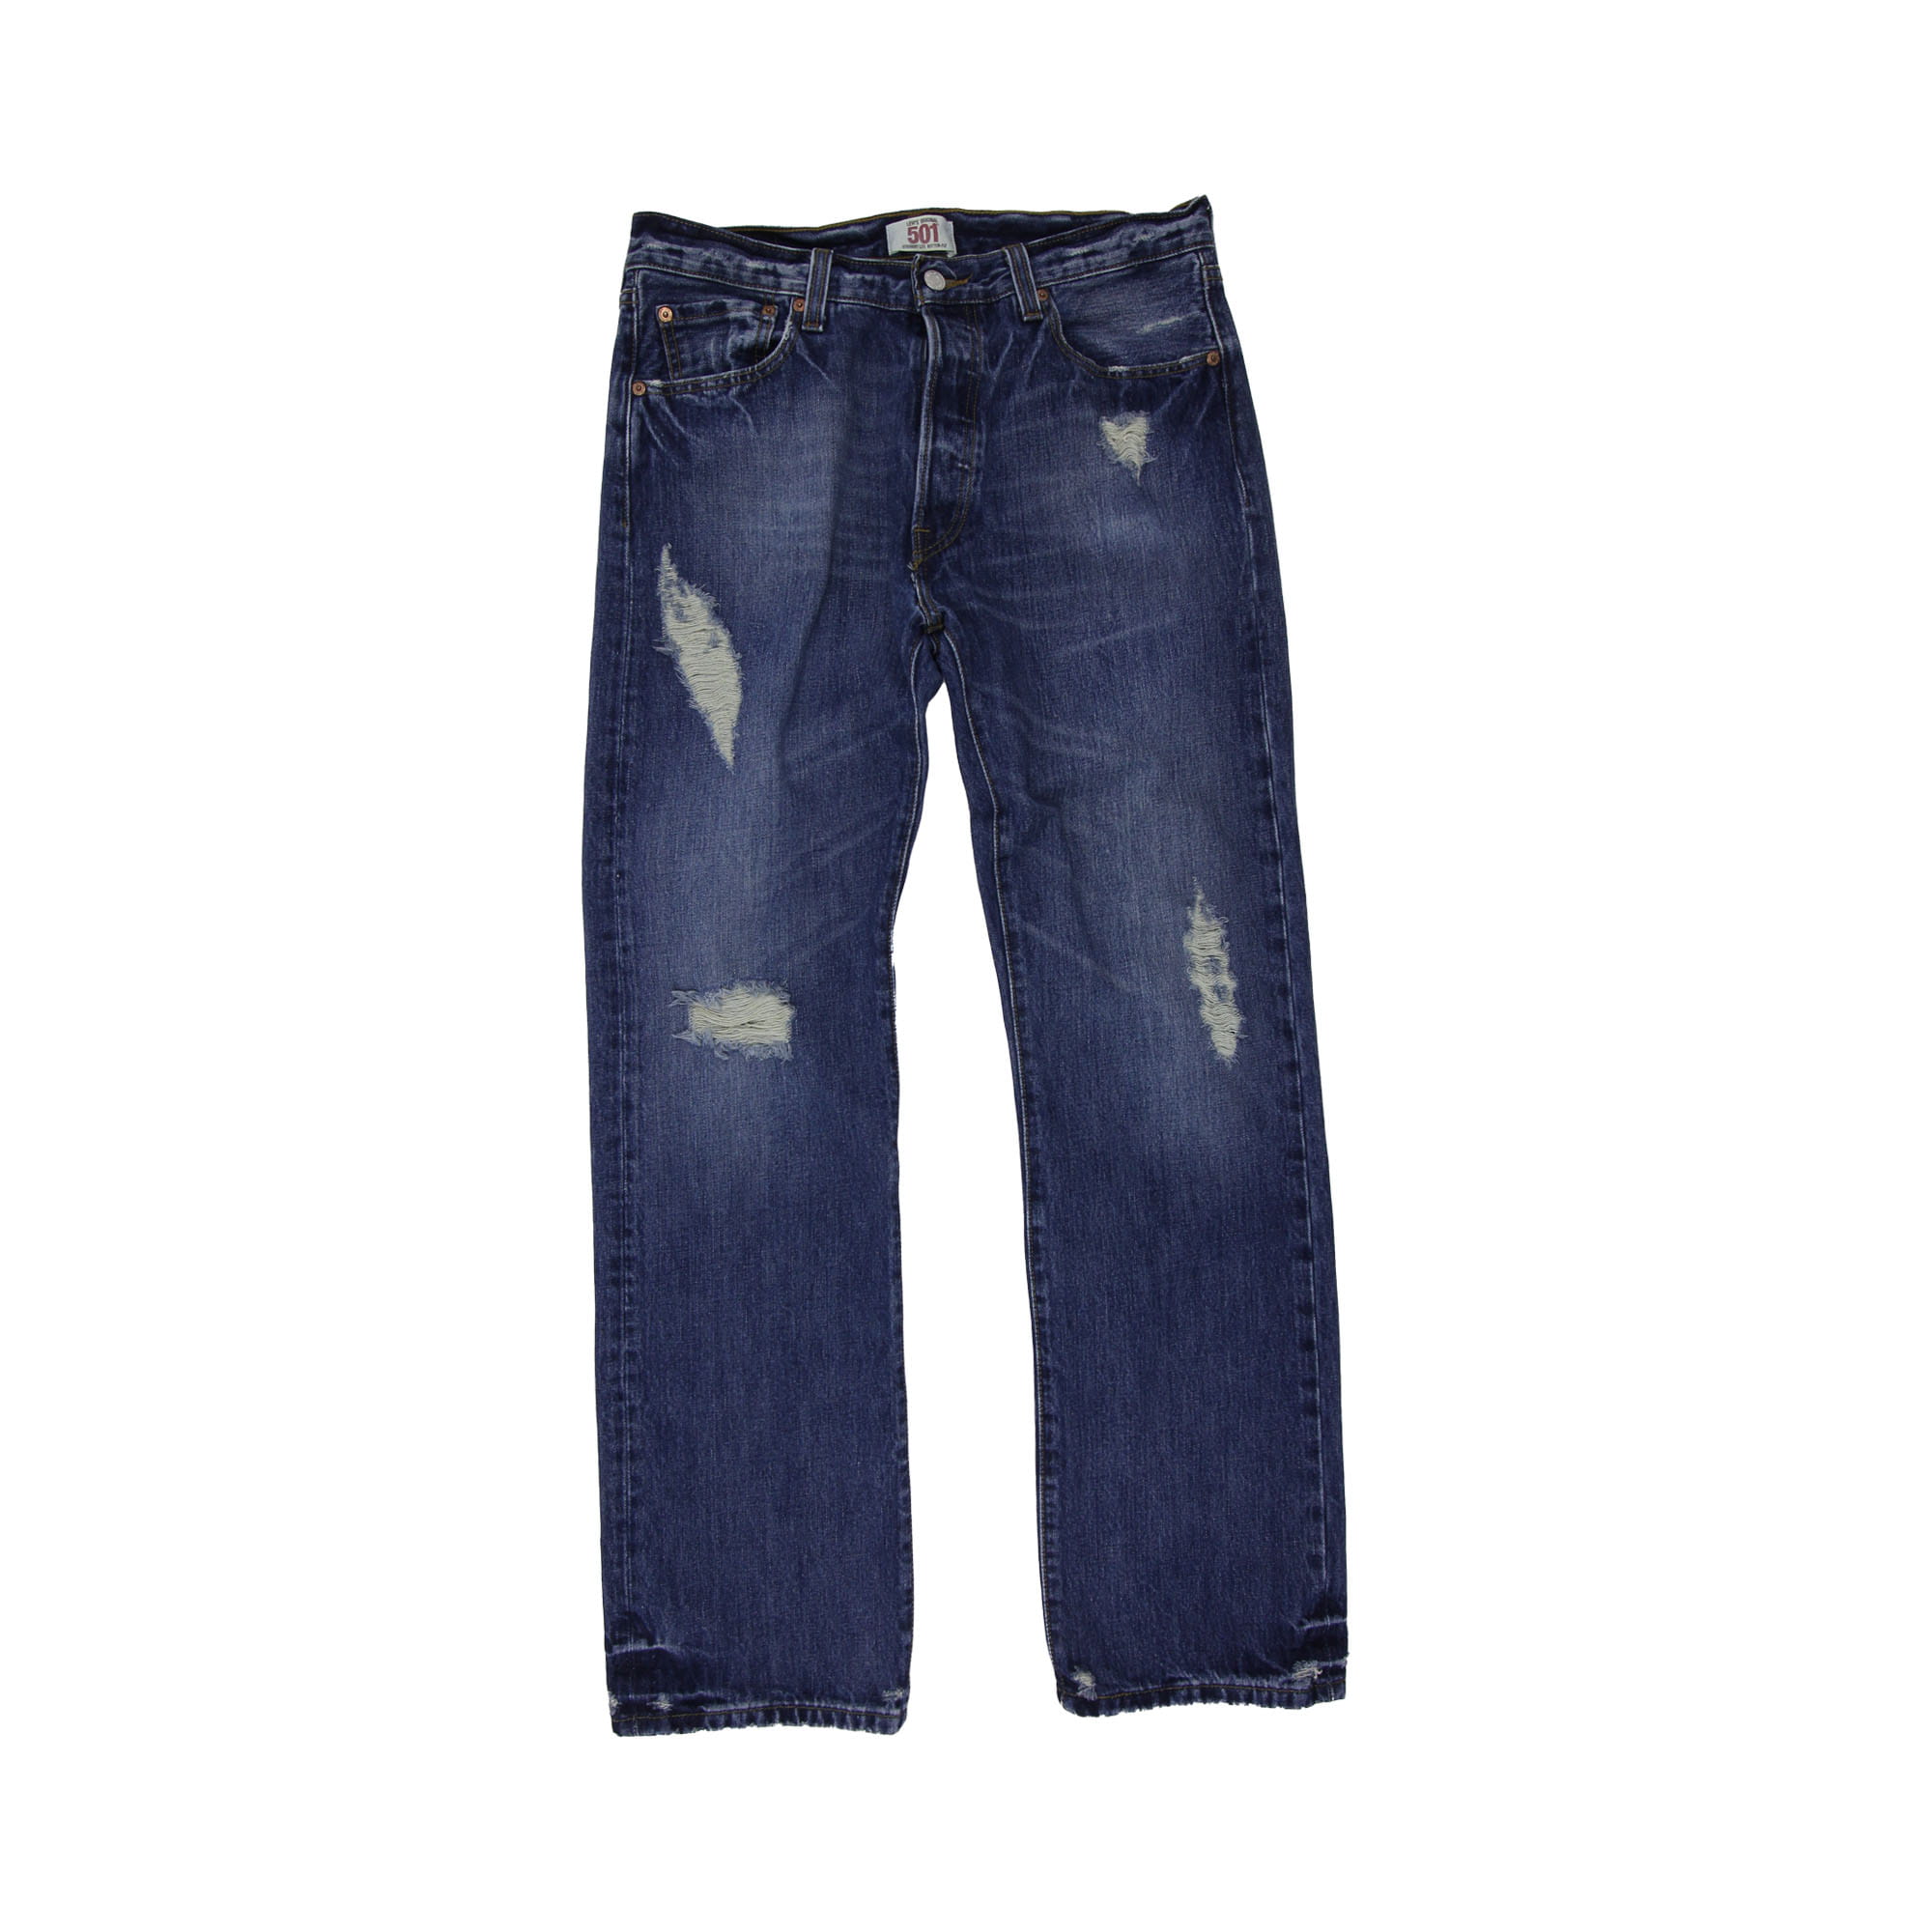 Levi's 501 Jeans -  W34 L34